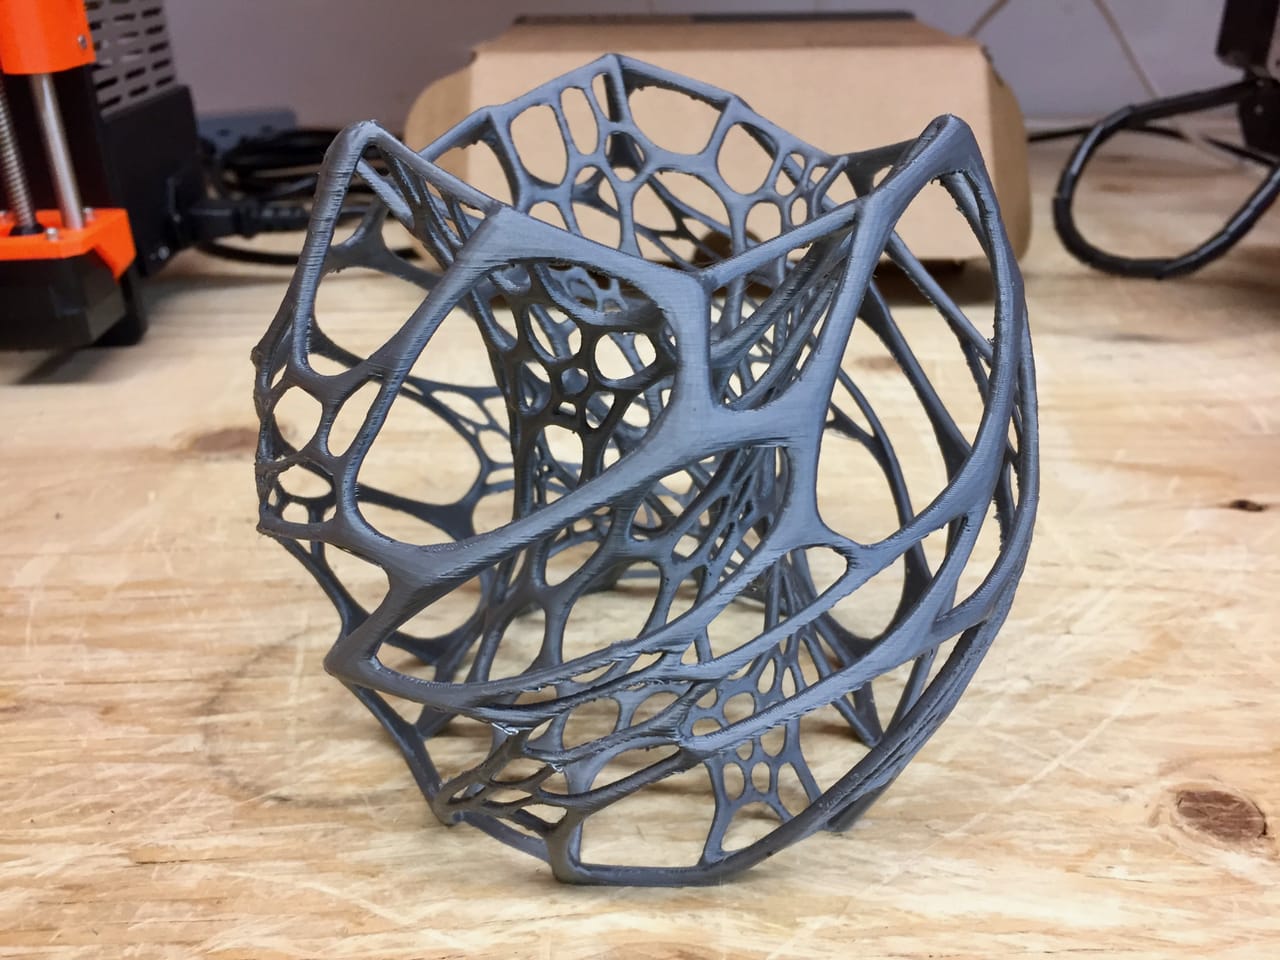  A complex 3D print made on our Original Pruse i3 desktop 3D printer 